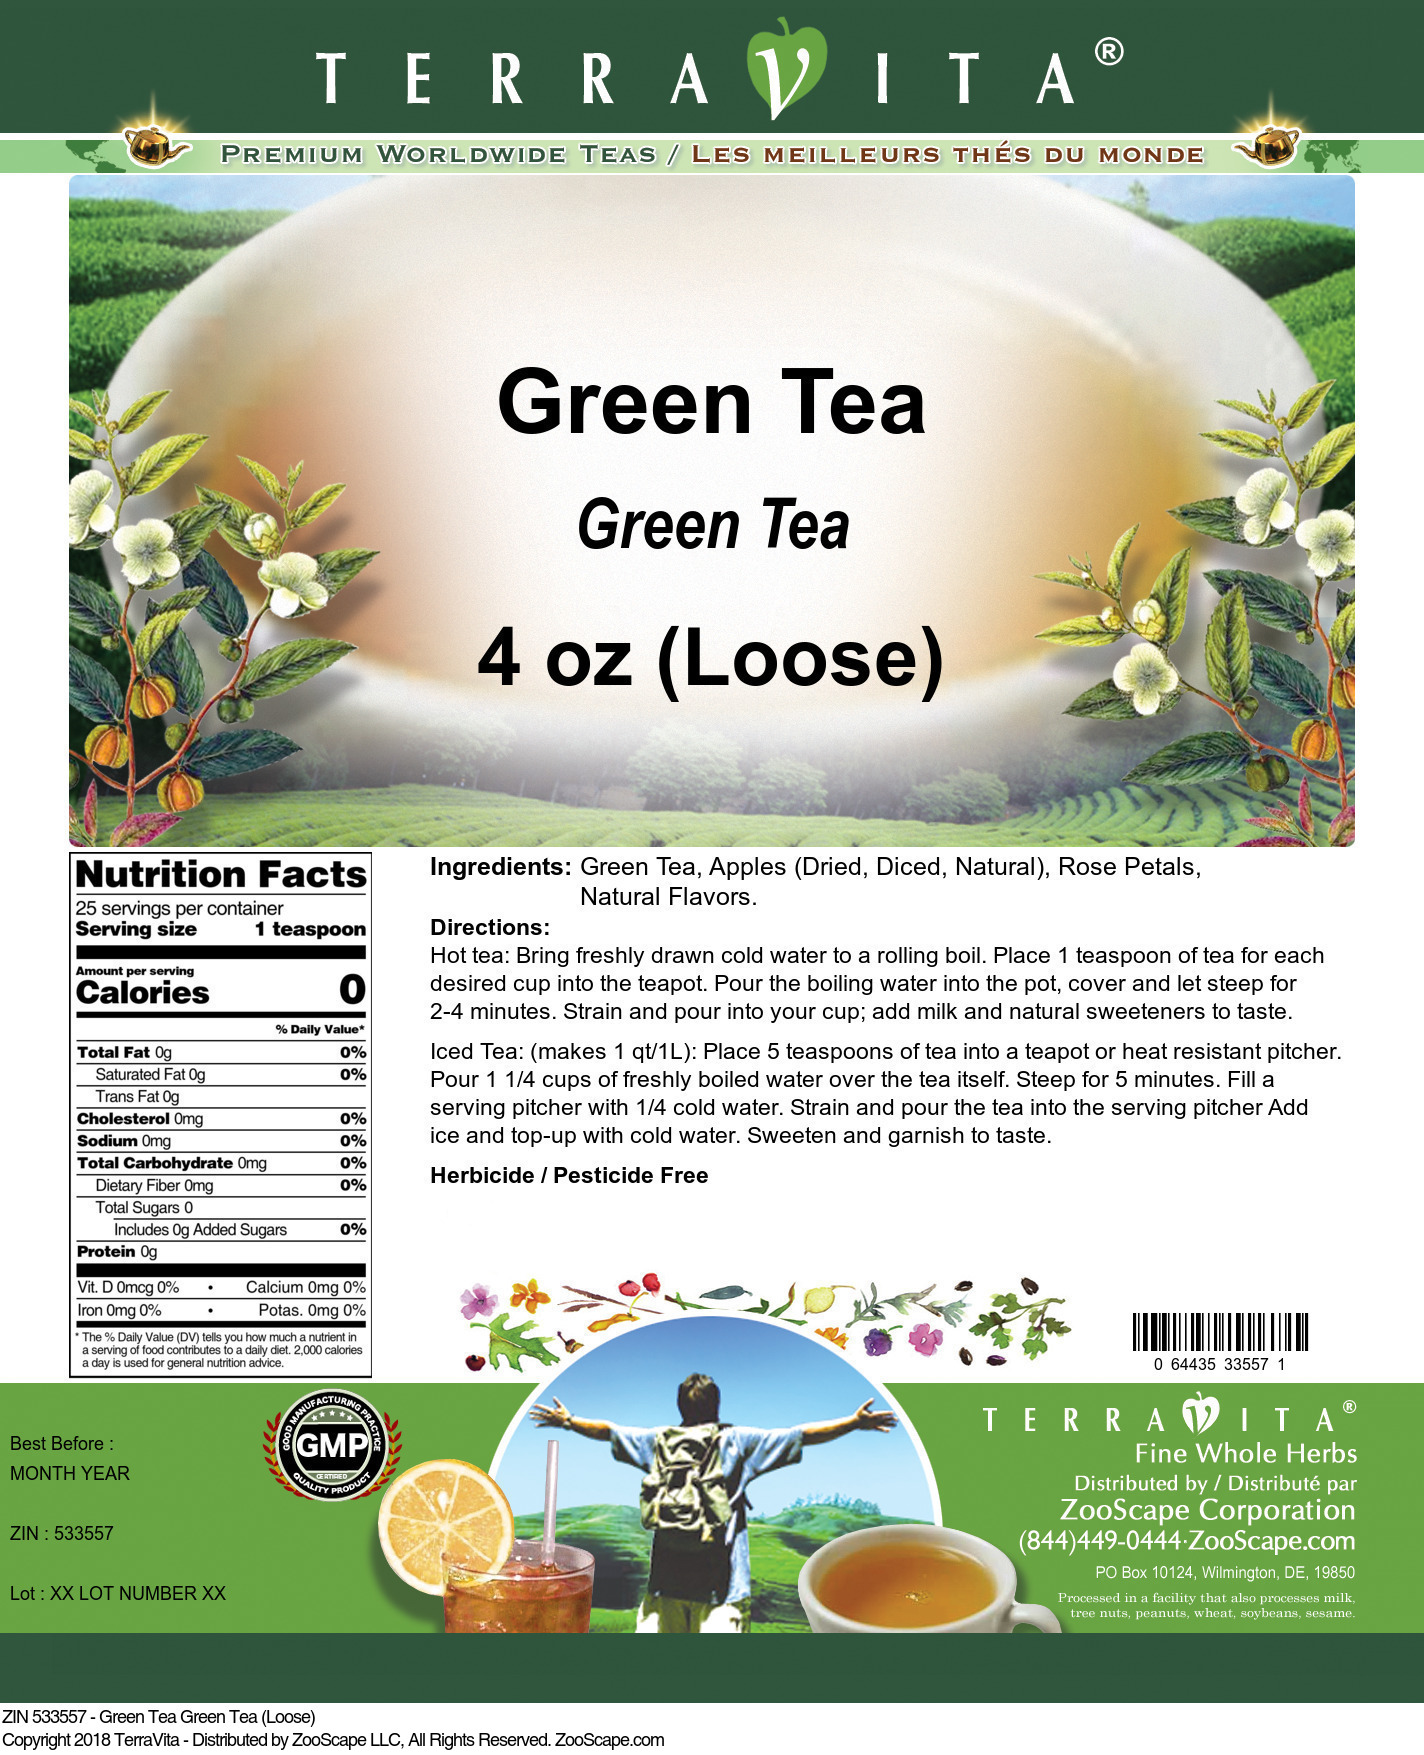 Green Tea Green Tea (Loose) - Label